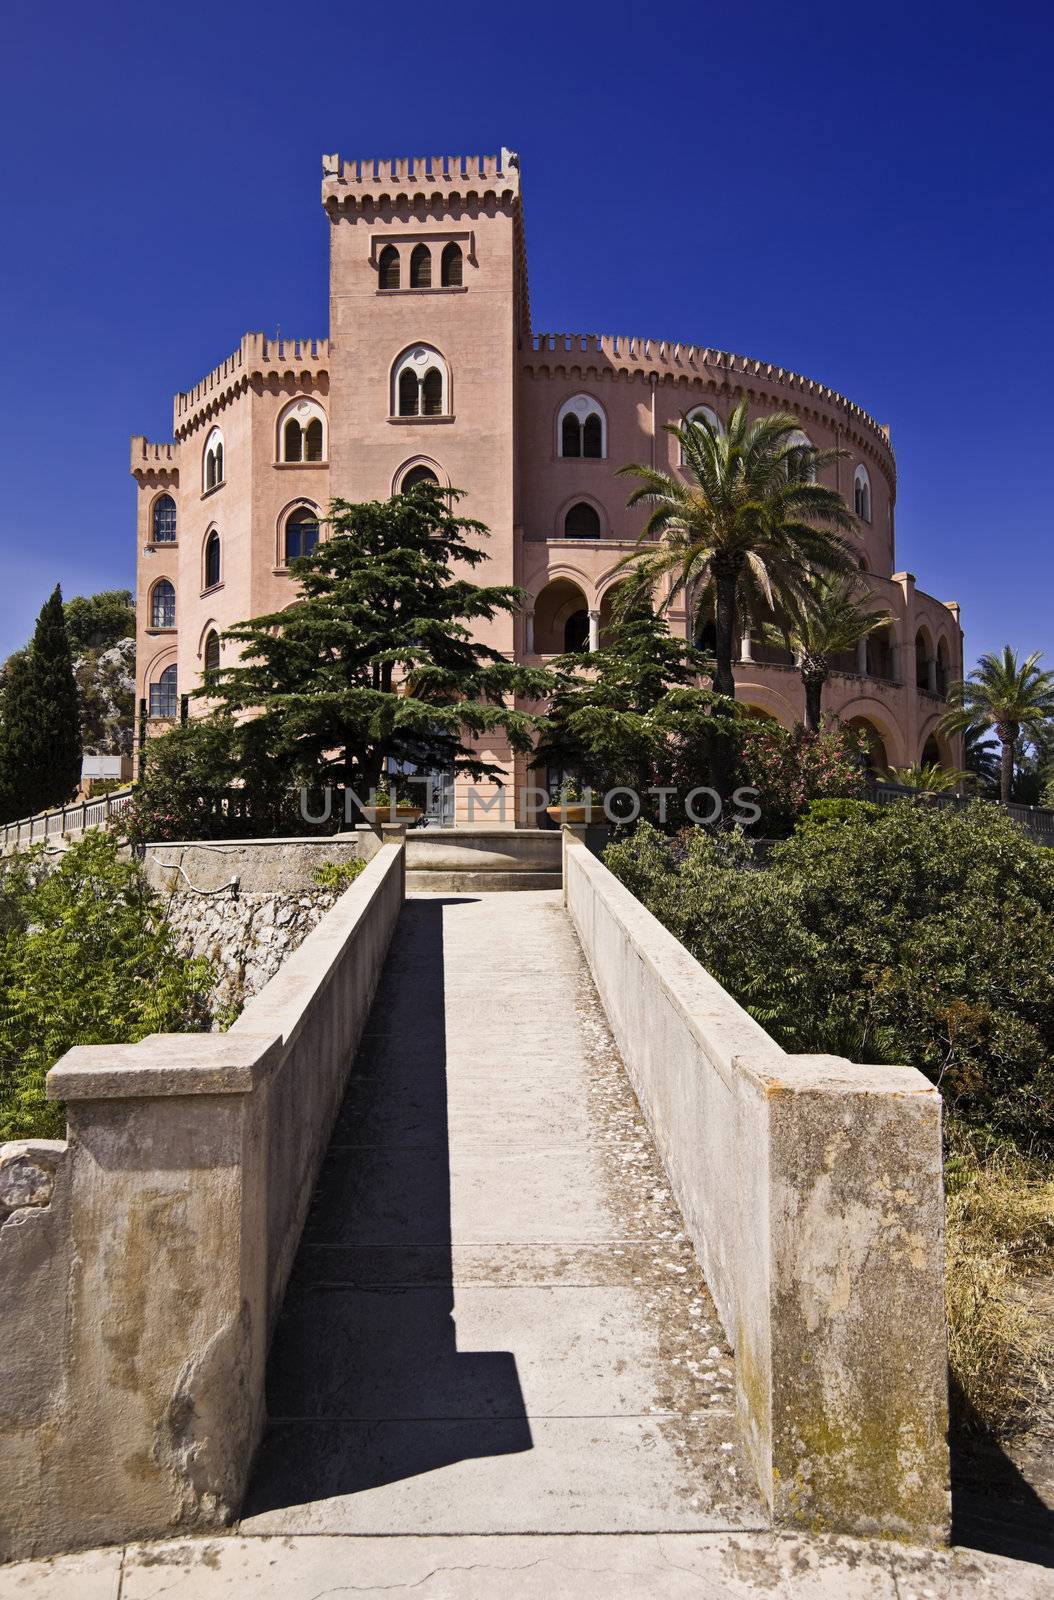 ITALY, Sicily, Palermo, view of the Utvegio castle, on Pellegrino mount